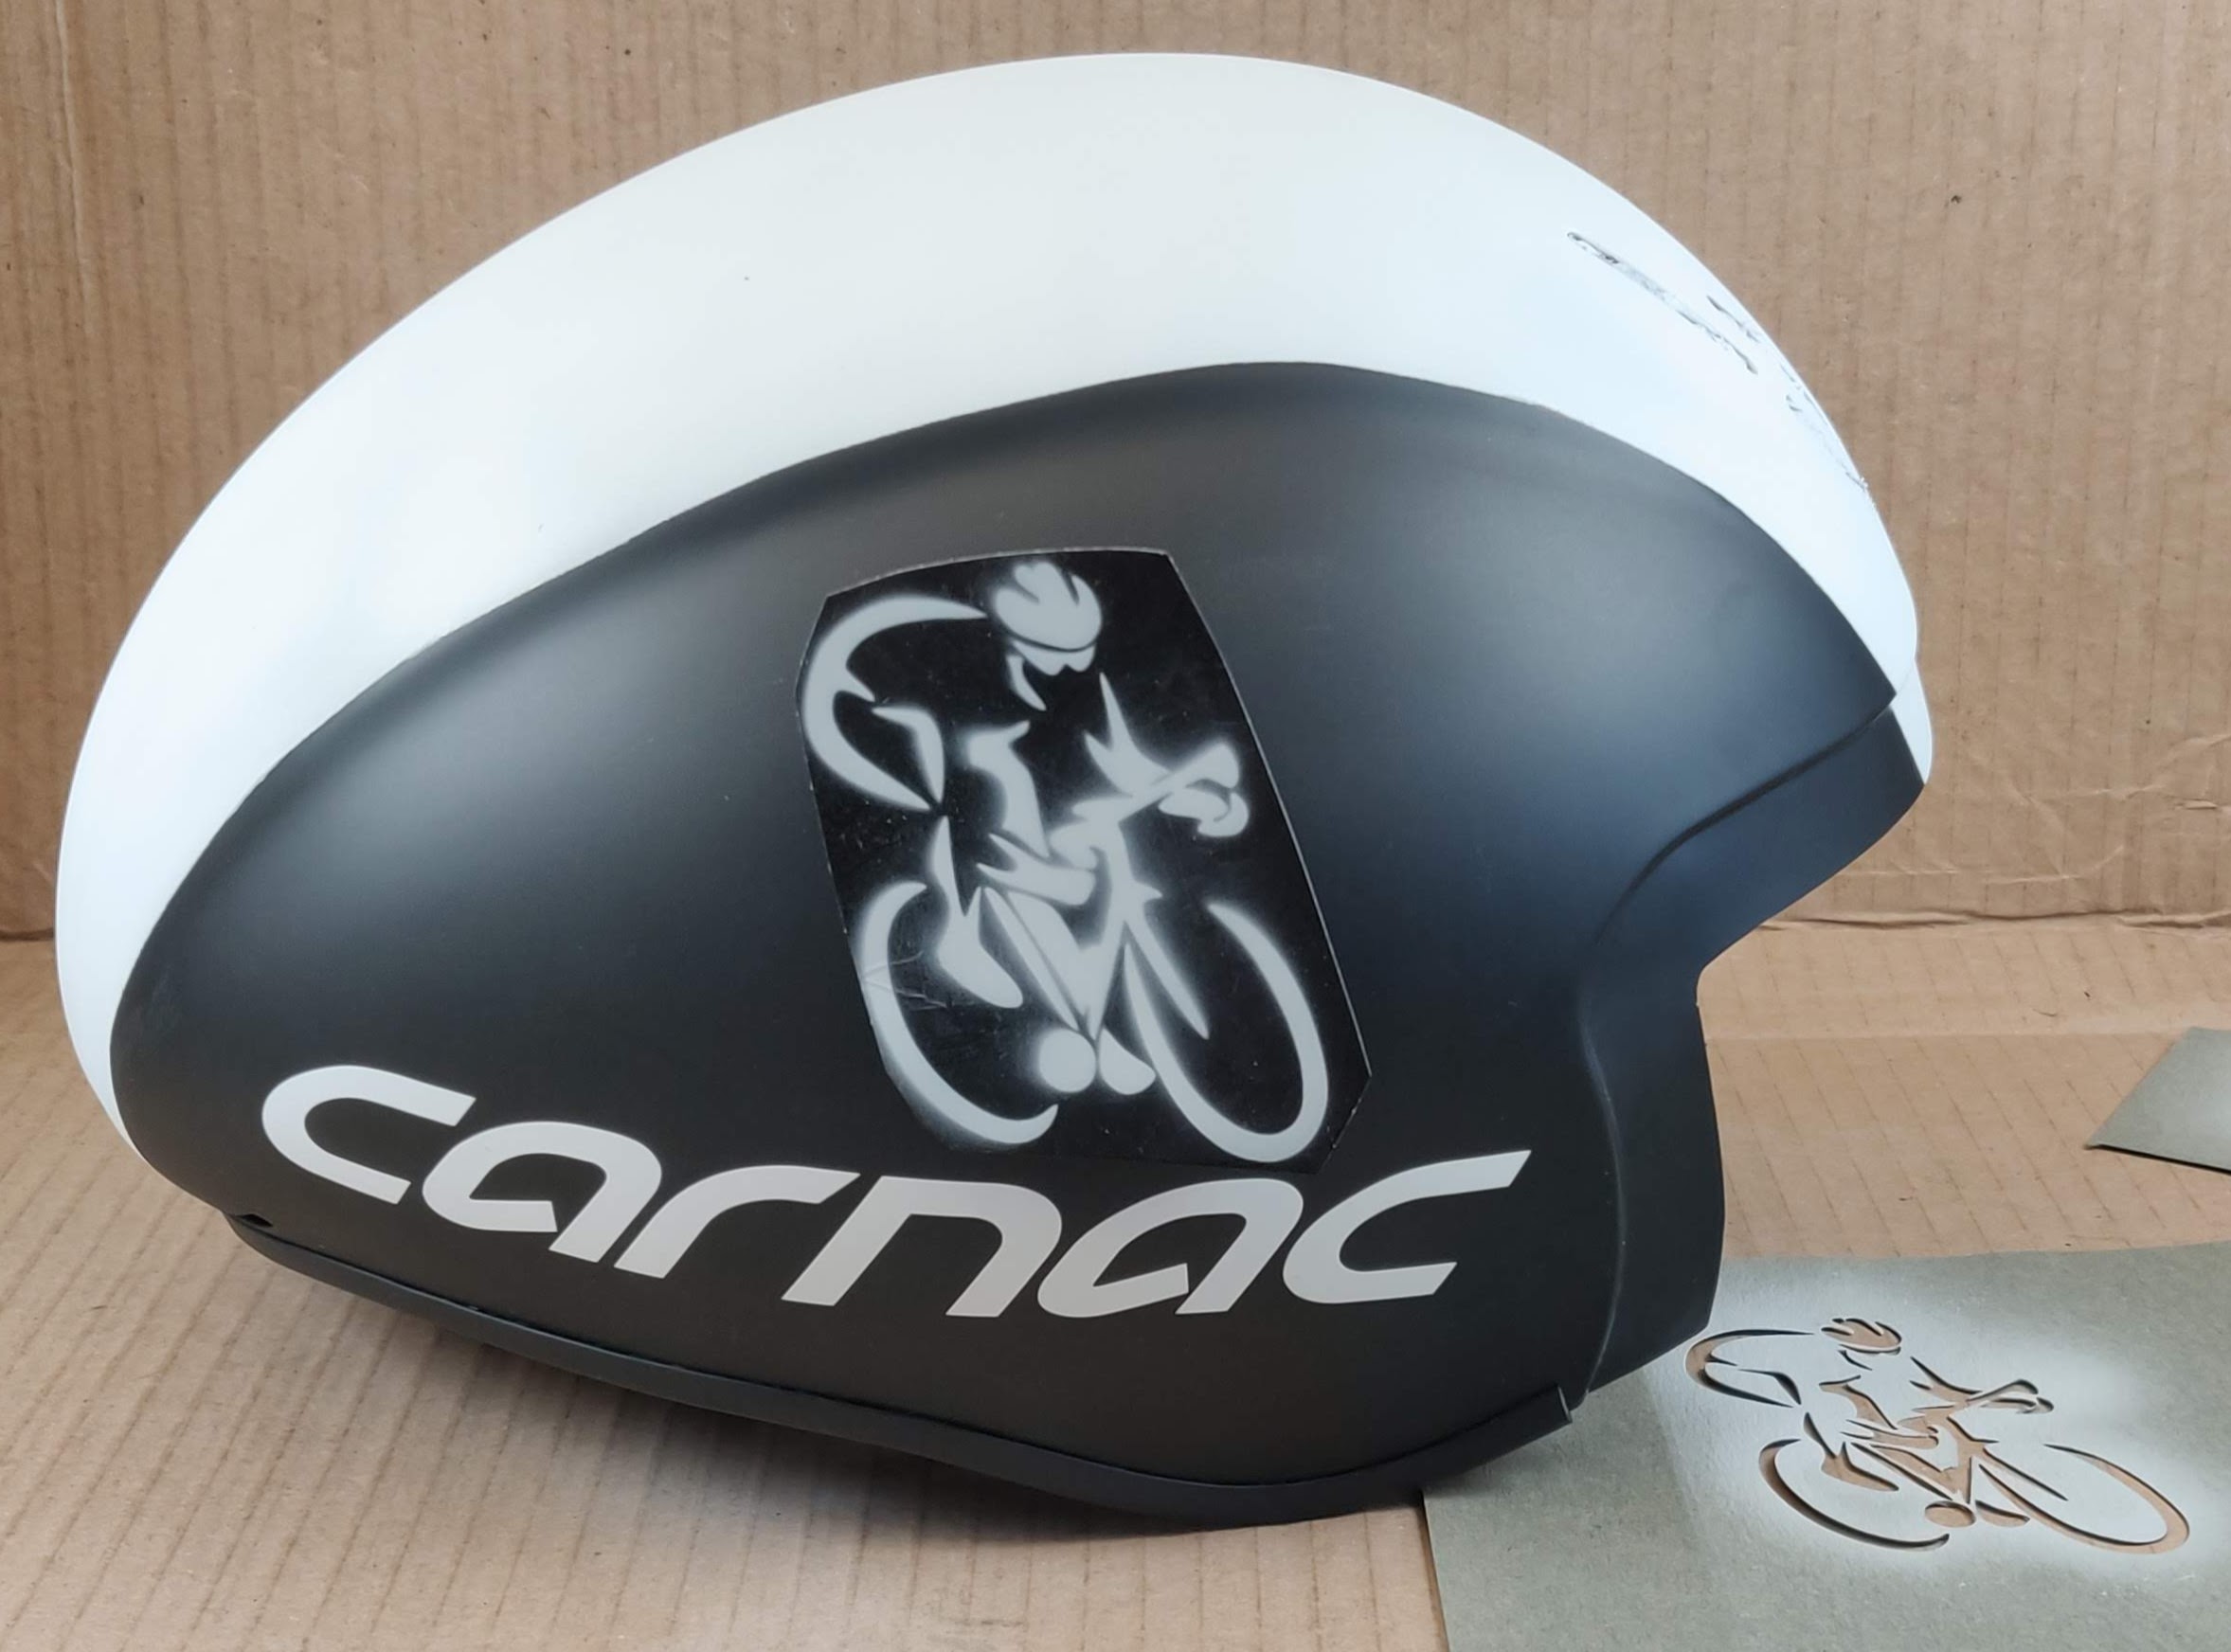 White primed helmet with stencil